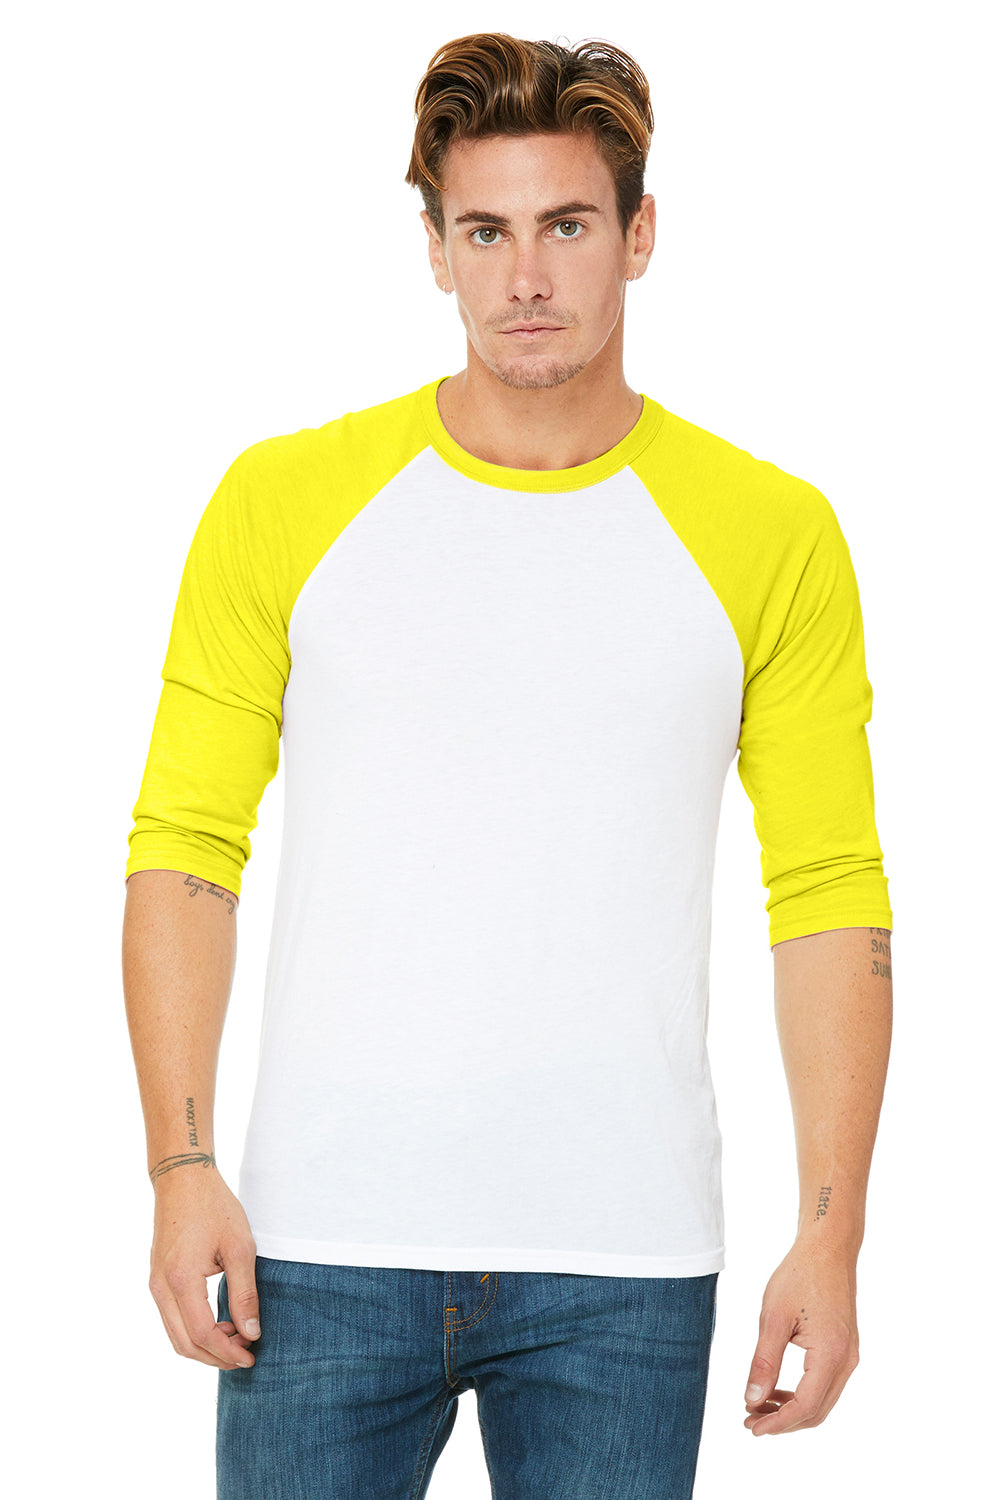 Bella + Canvas 3200 Mens 3/4 Sleeve Crewneck T-Shirt White/Neon Yellow Front